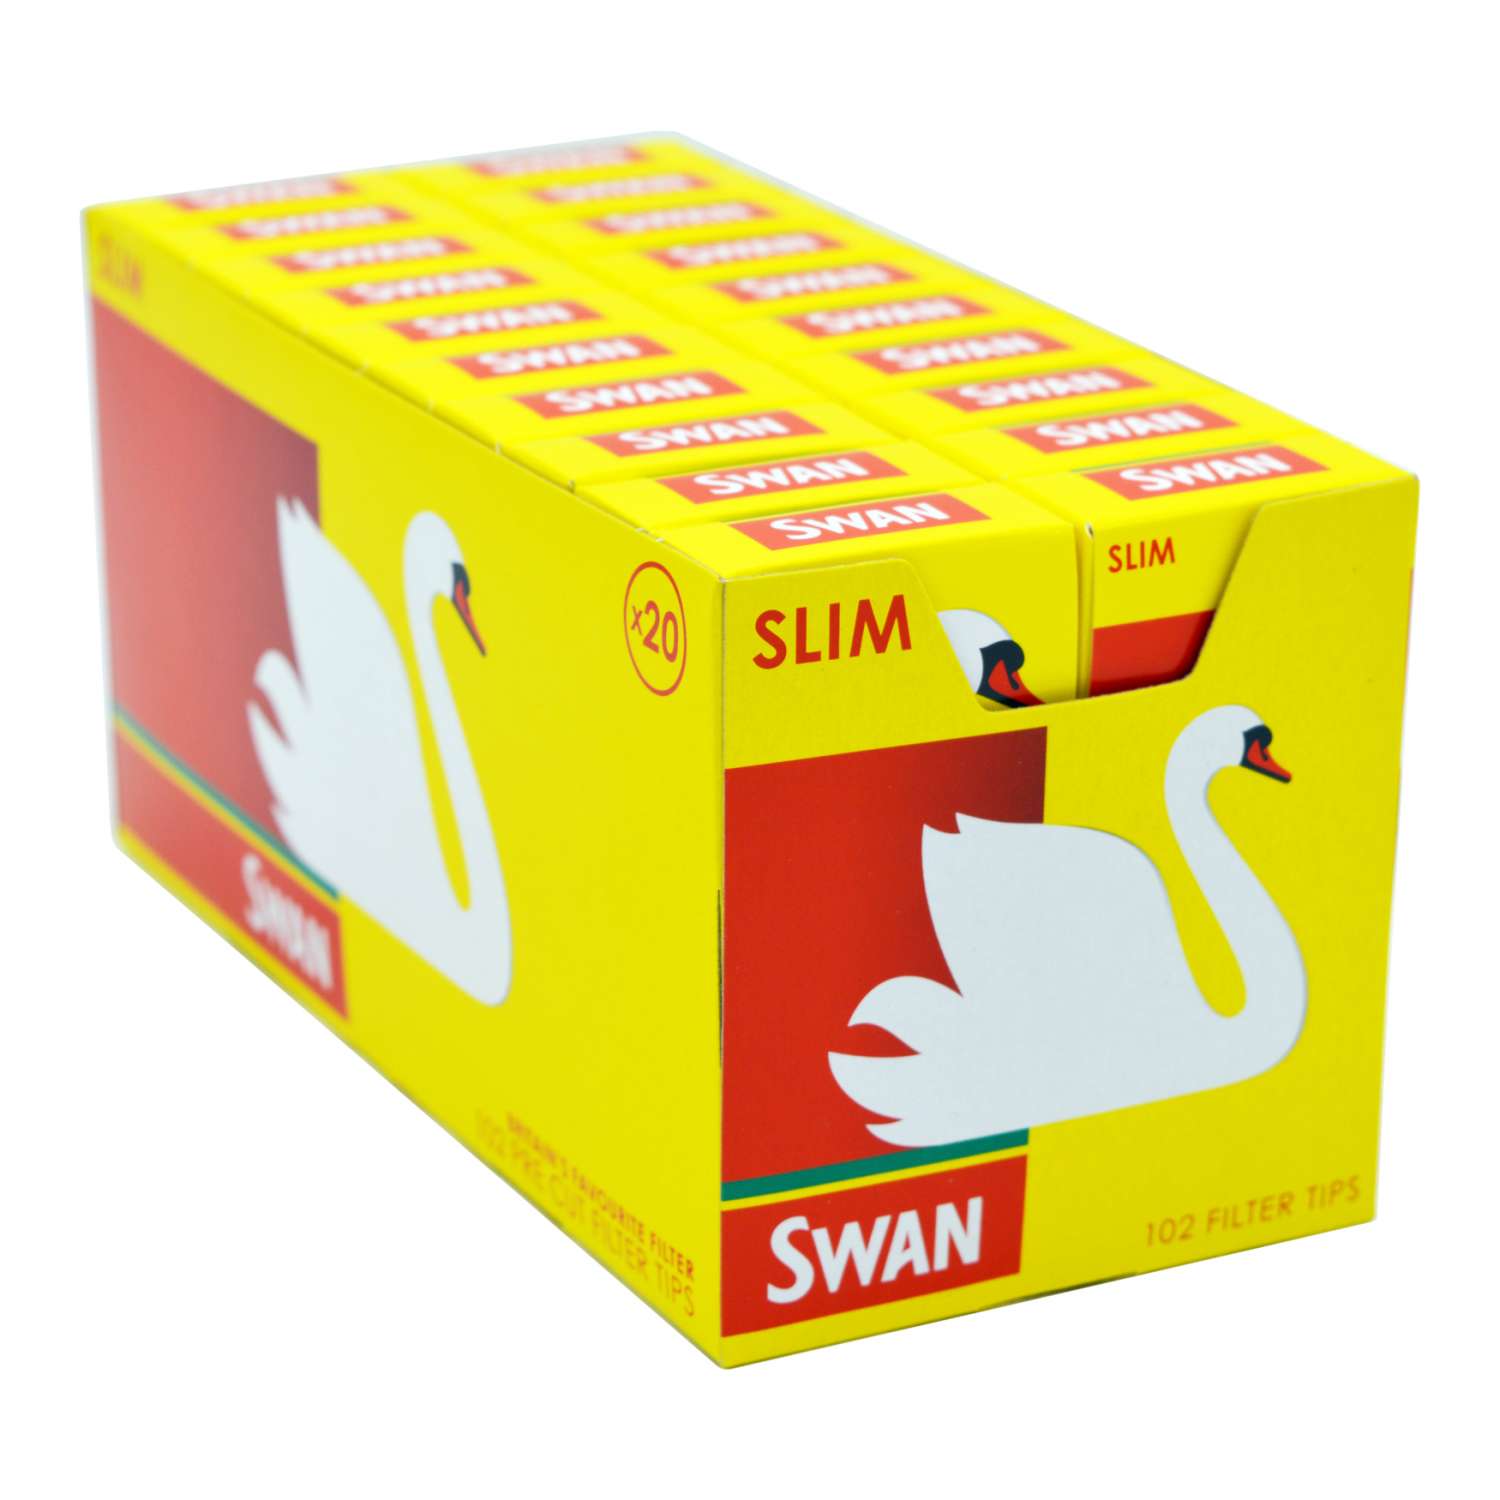 Swan Slim Filter Tips 20 box